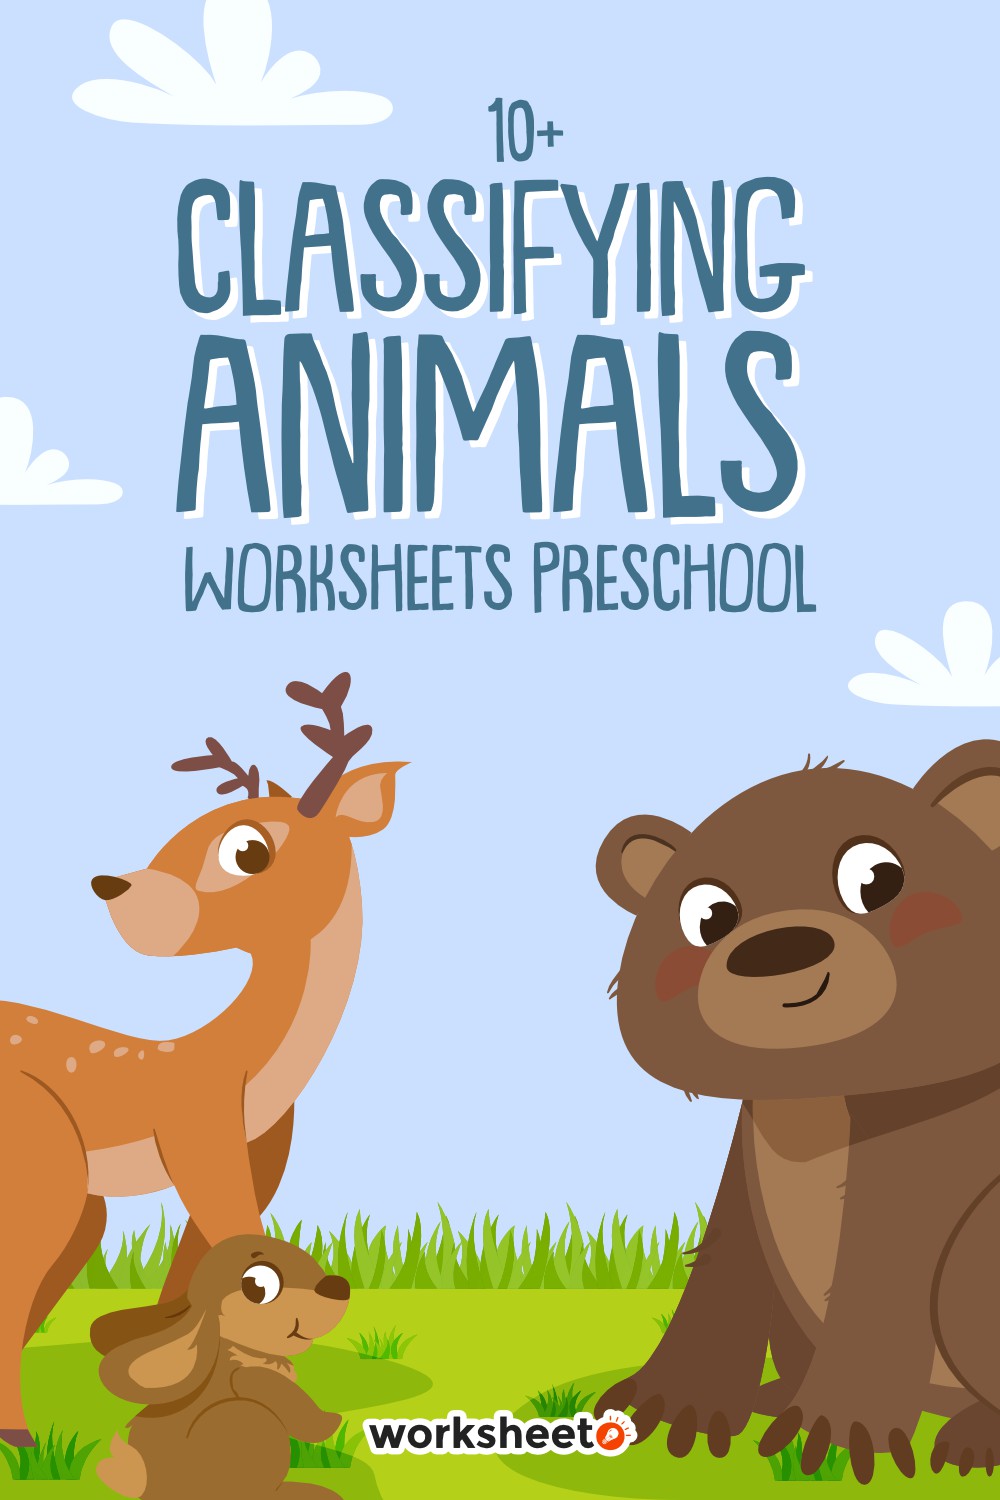 Classifying Animals Worksheets Preschool